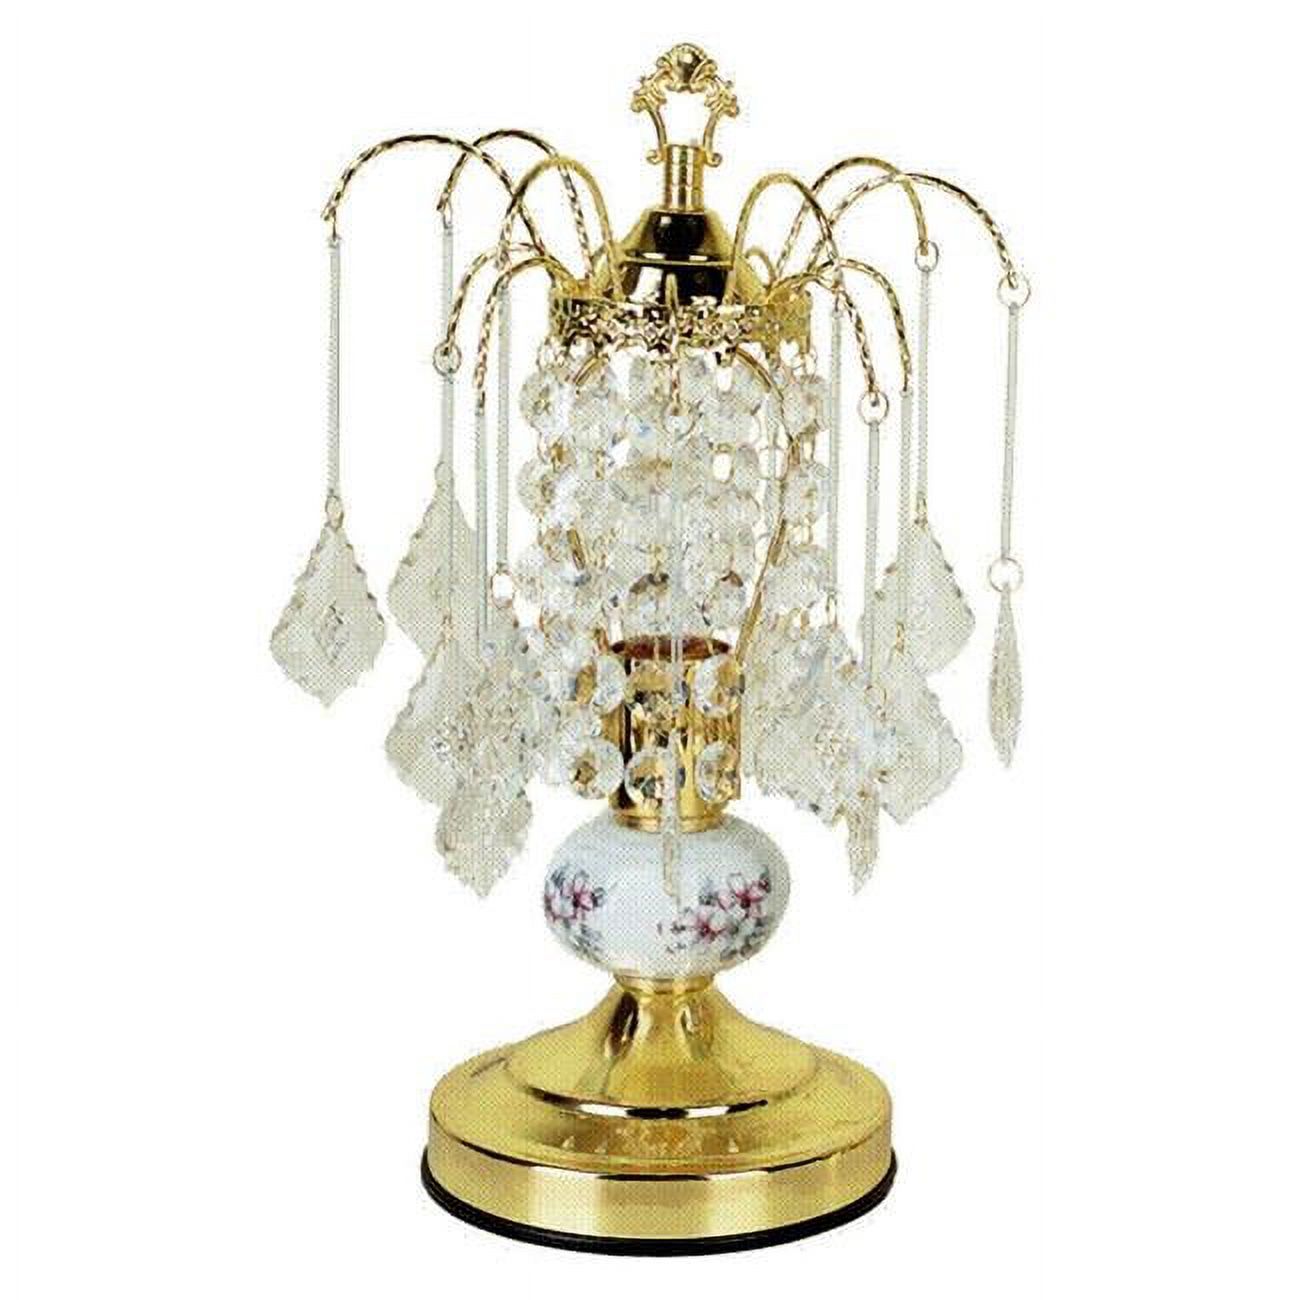 HomeRoots Vintage Gold Floral Chandelier Table Lamp - image 1 of 3